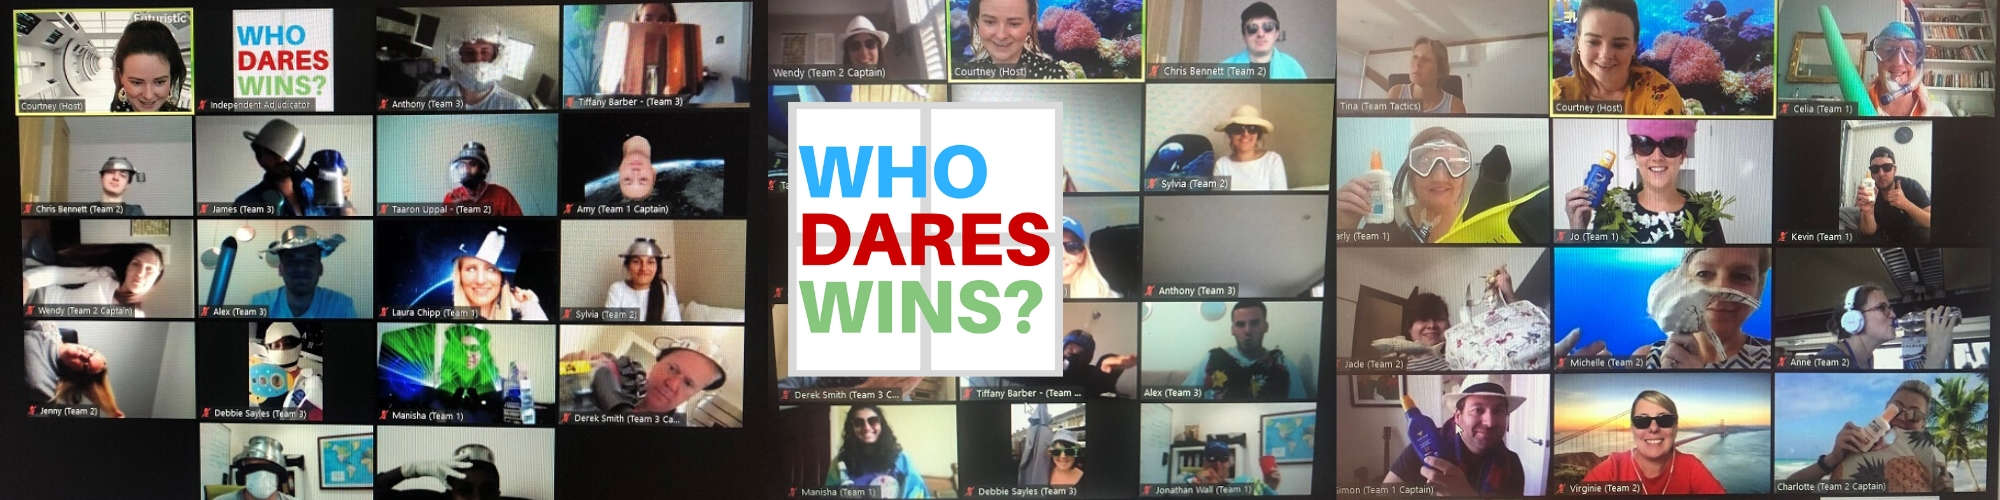 who dares wins virtual team building